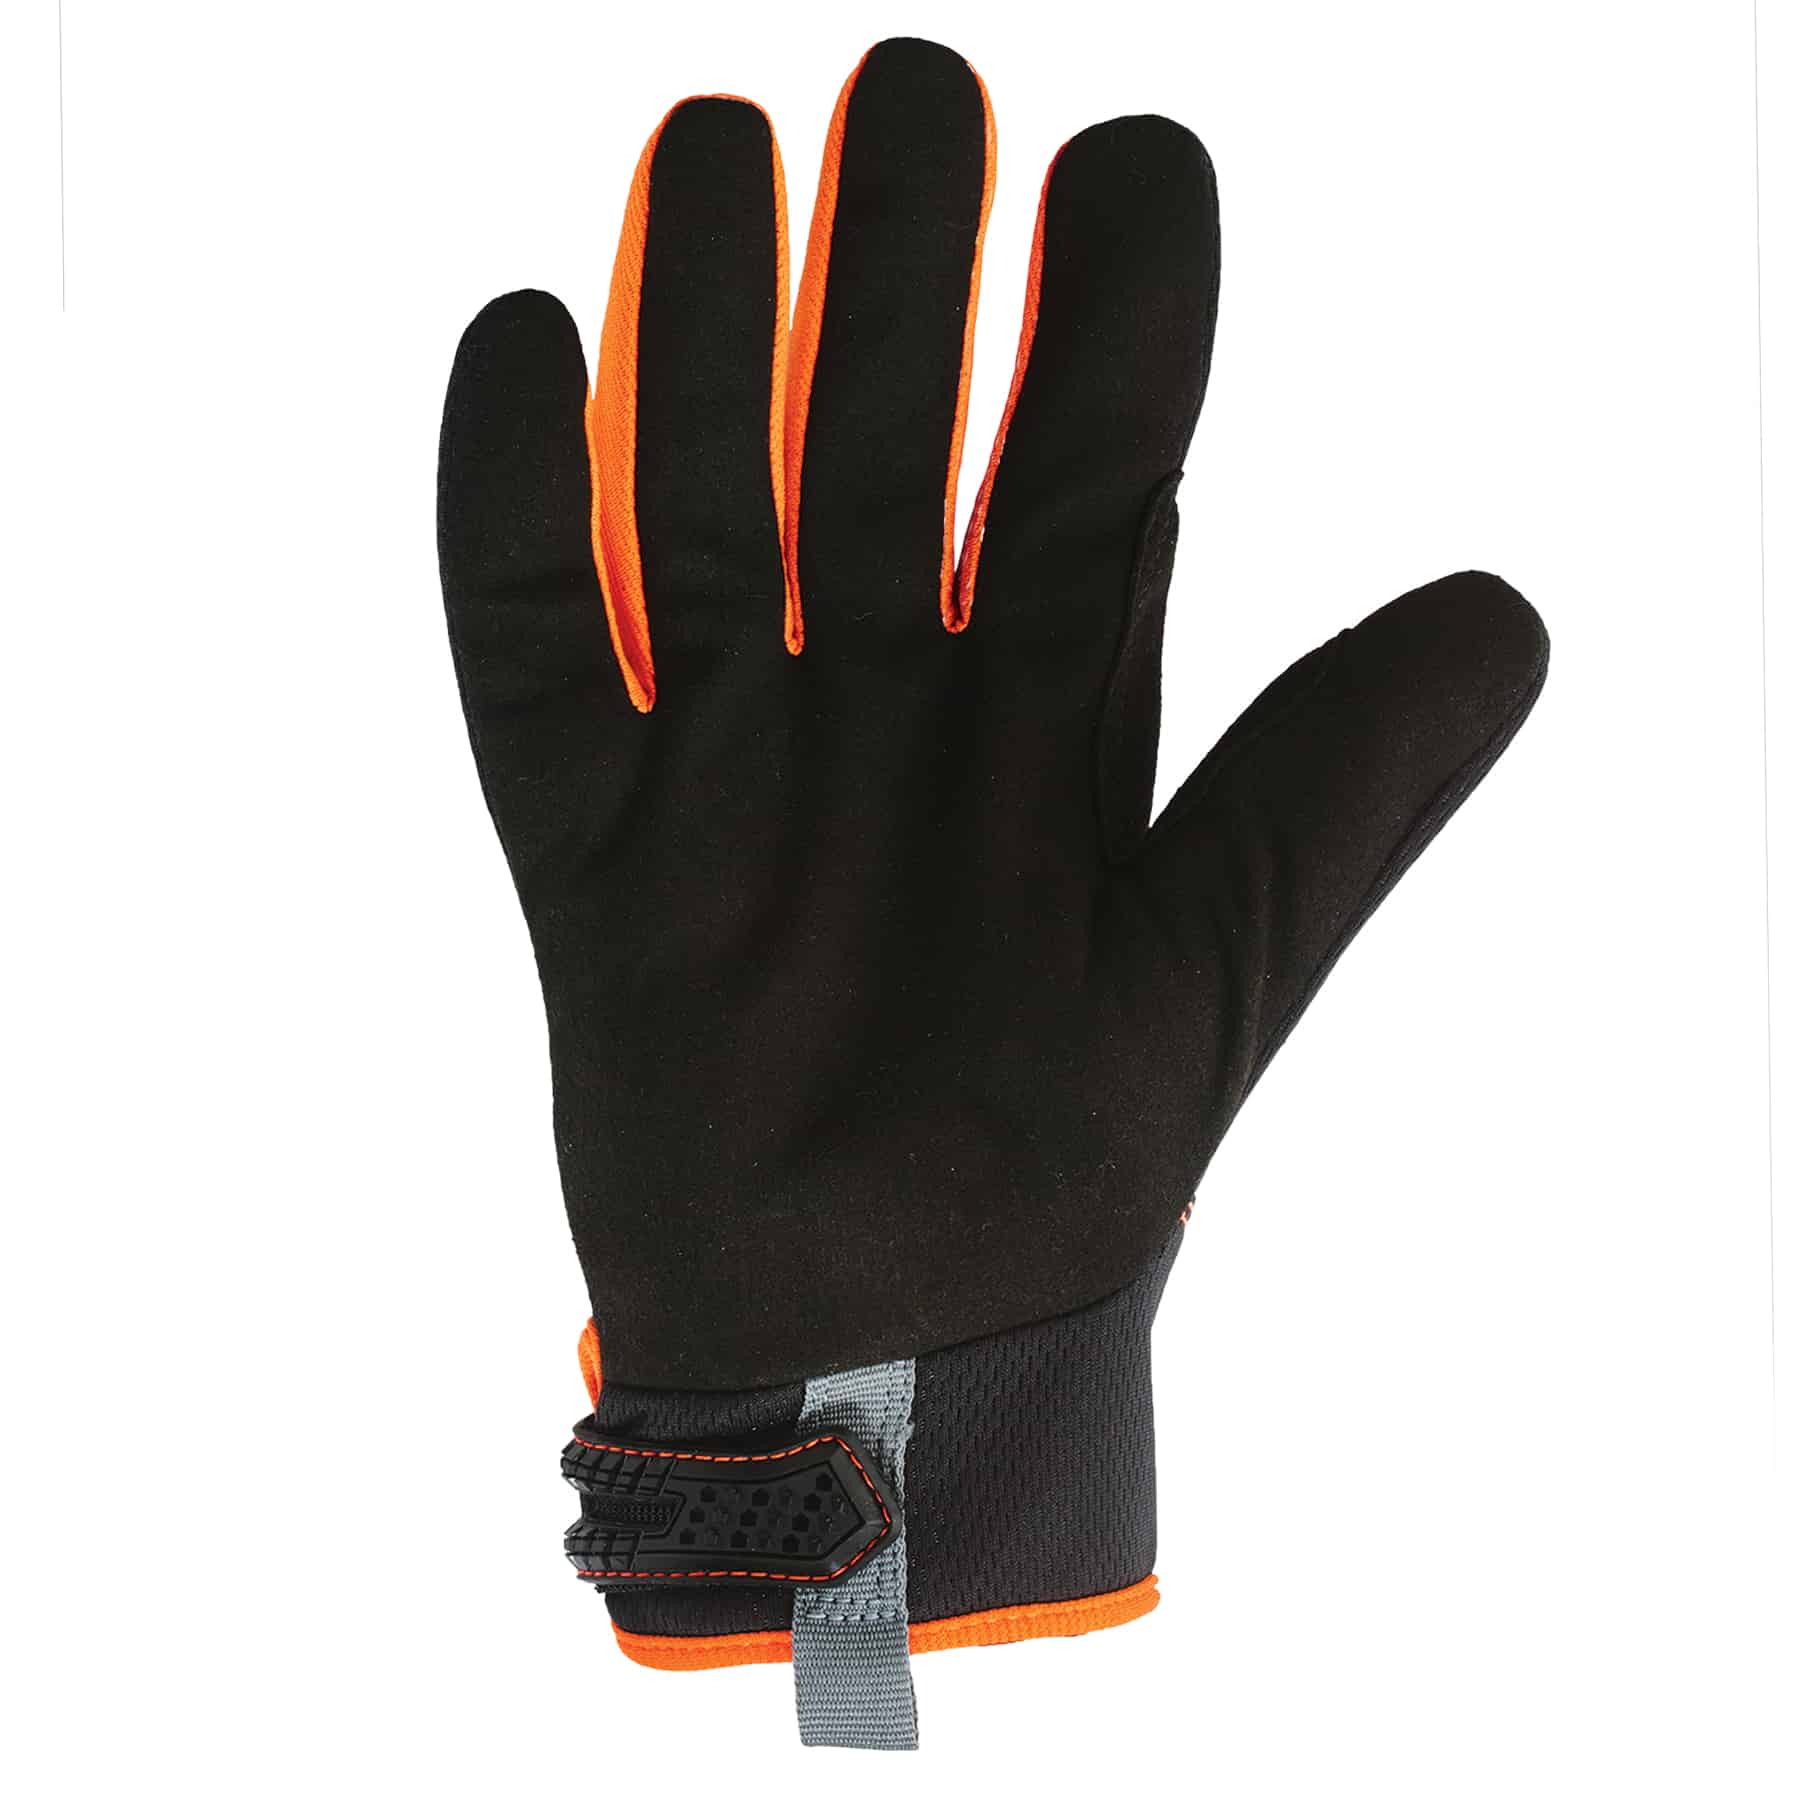 https://www.ergodyne.com/sites/default/files/product-images/17172-812-standard-utility-gloves-black-palm.jpg